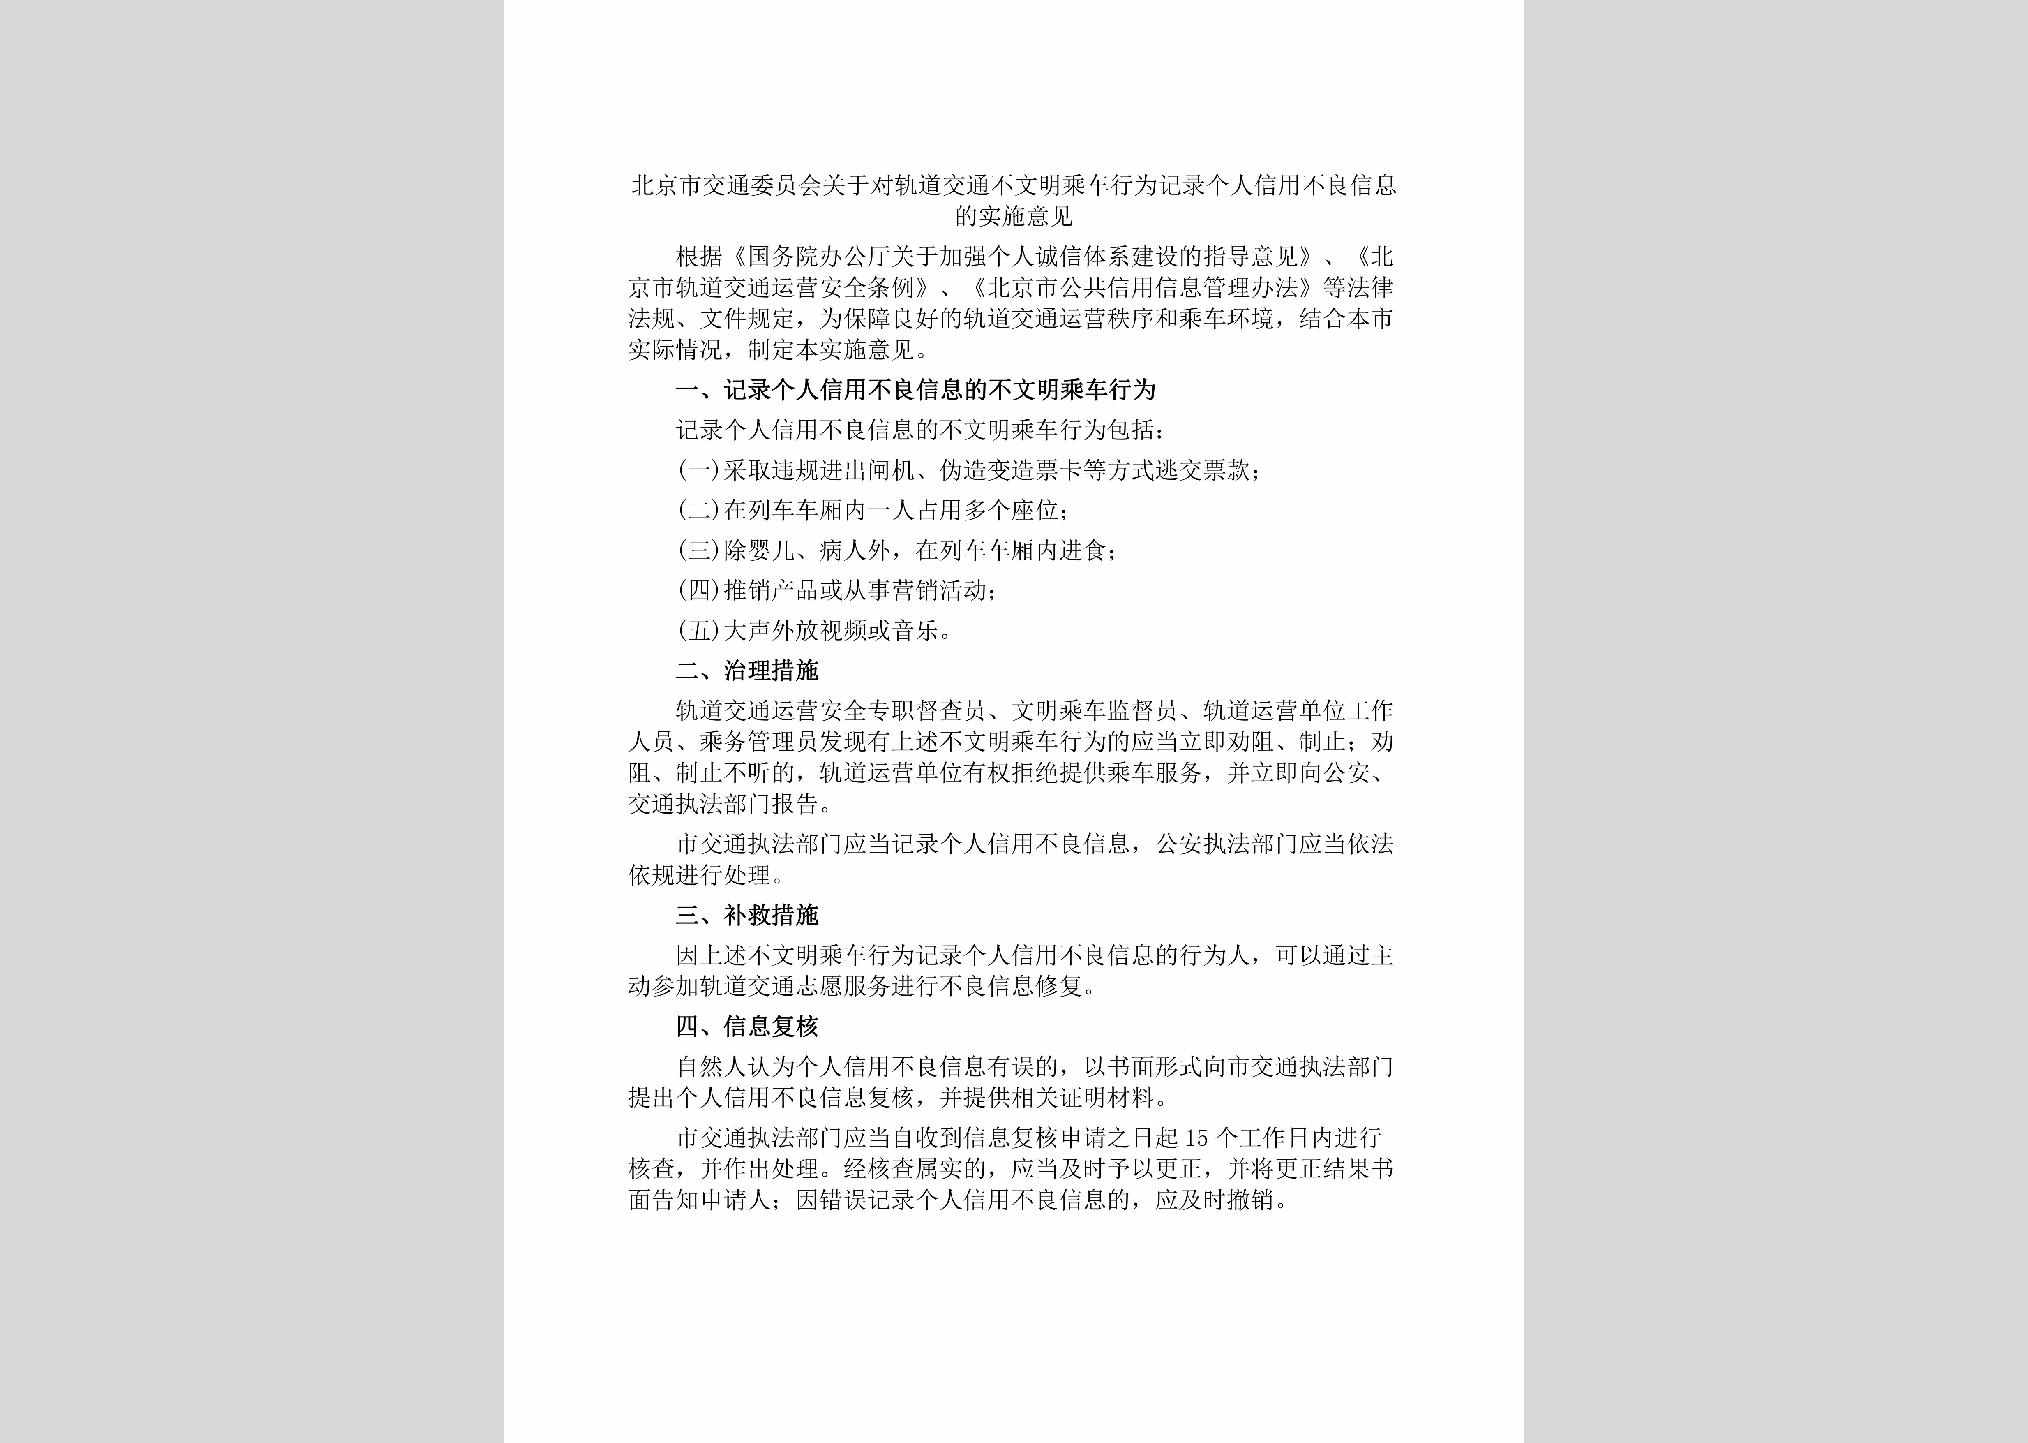 BJ-GDJTBWMC-2019：北京市交通委员会关于对轨道交通不文明乘车行为记录个人信用不良信息的实施意见